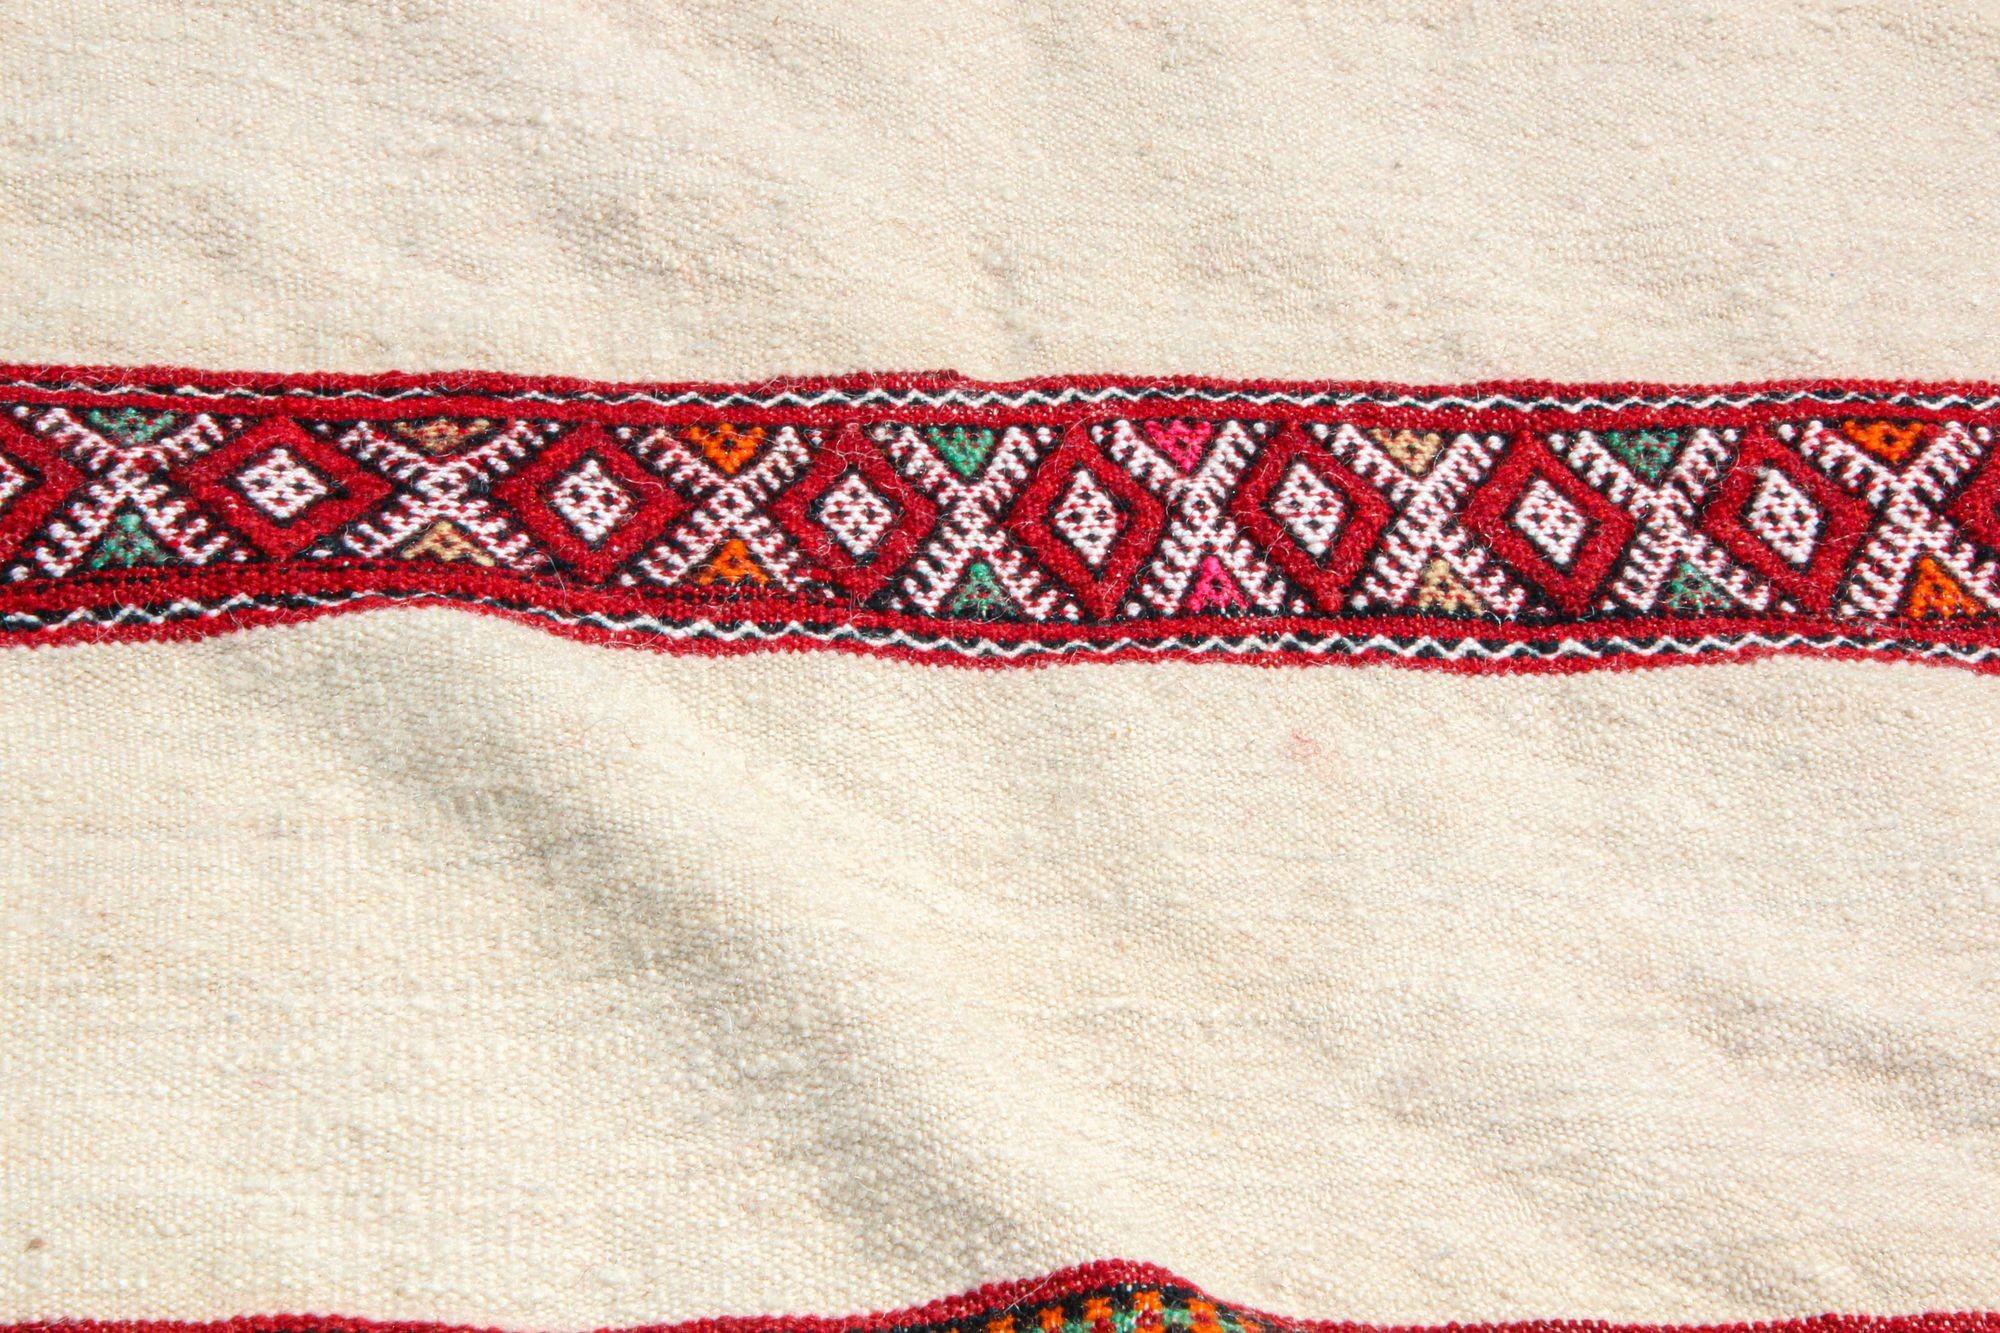 1960s Vintage Berber Moroccan Handira Bohemian Tribal Style Flat-Weave Textile For Sale 1